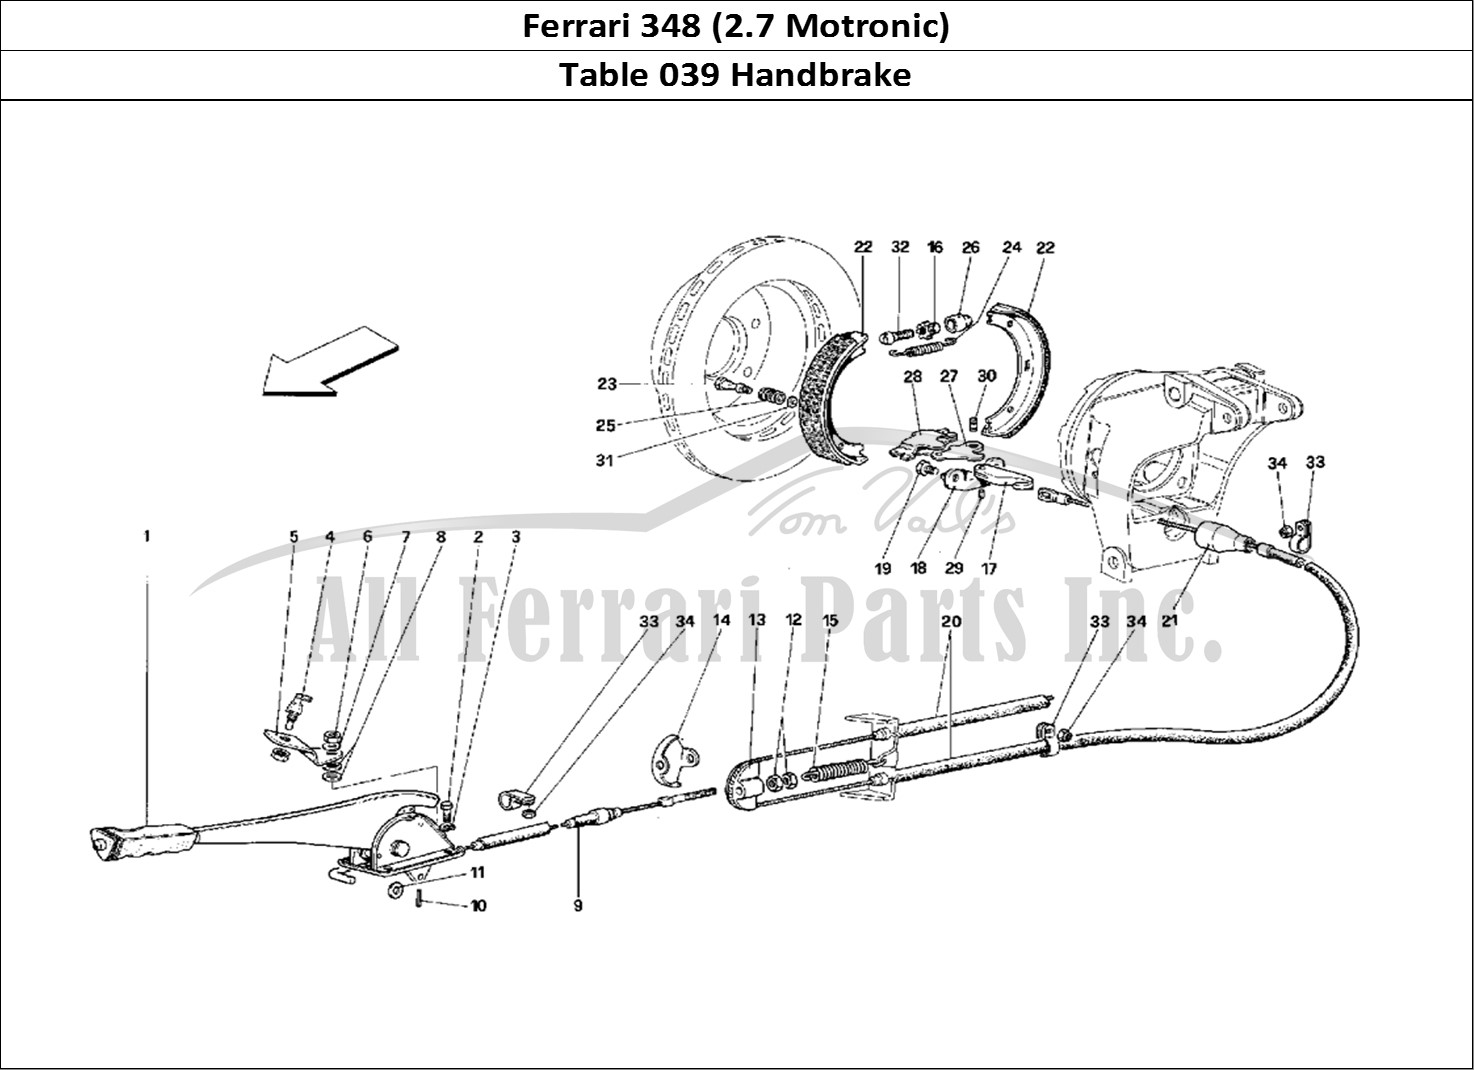 Ferrari Parts Ferrari 348 (2.7 Motronic) Page 039 Hand-Brake Control